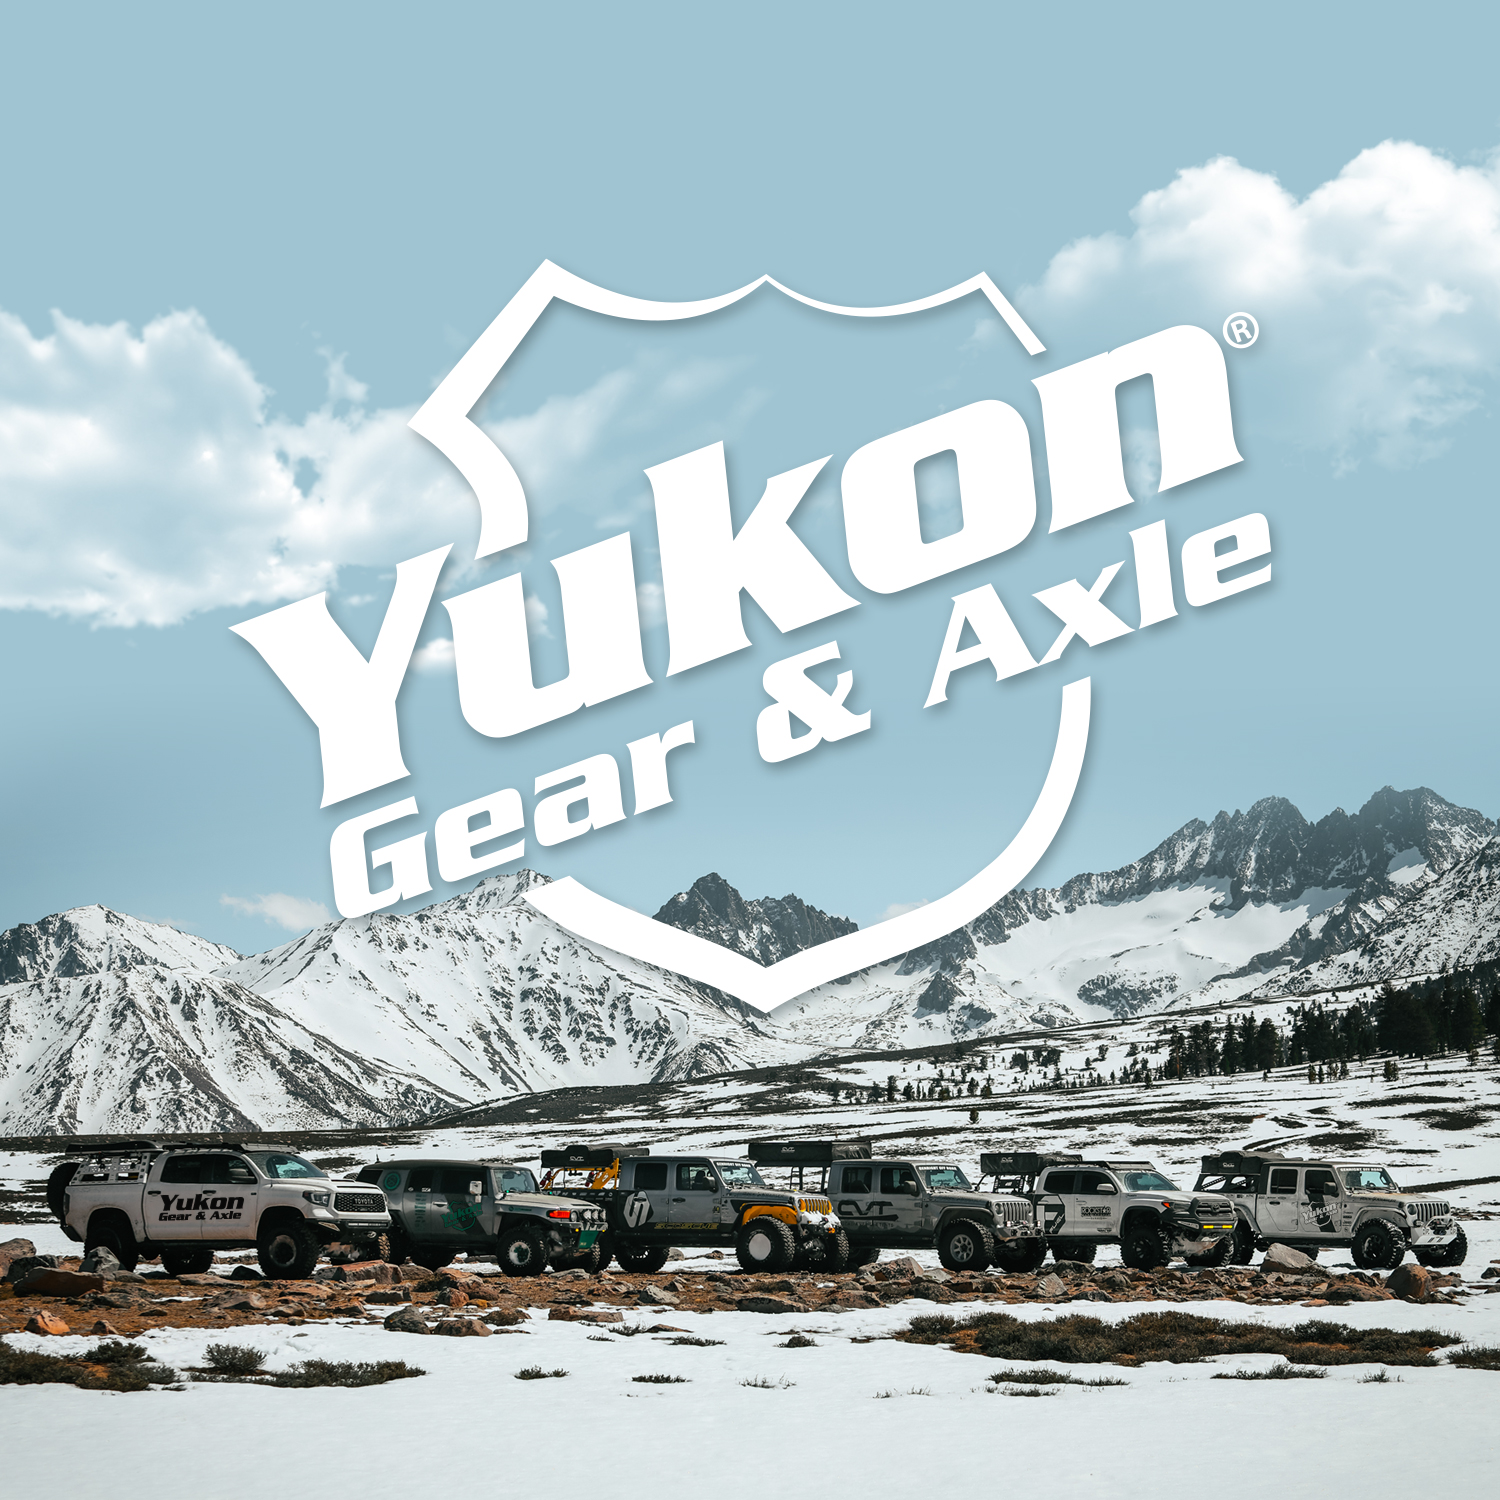 Yukon Tapered Axle Bearing and Seal Kit, 3.150" OD, 1.562" ID 